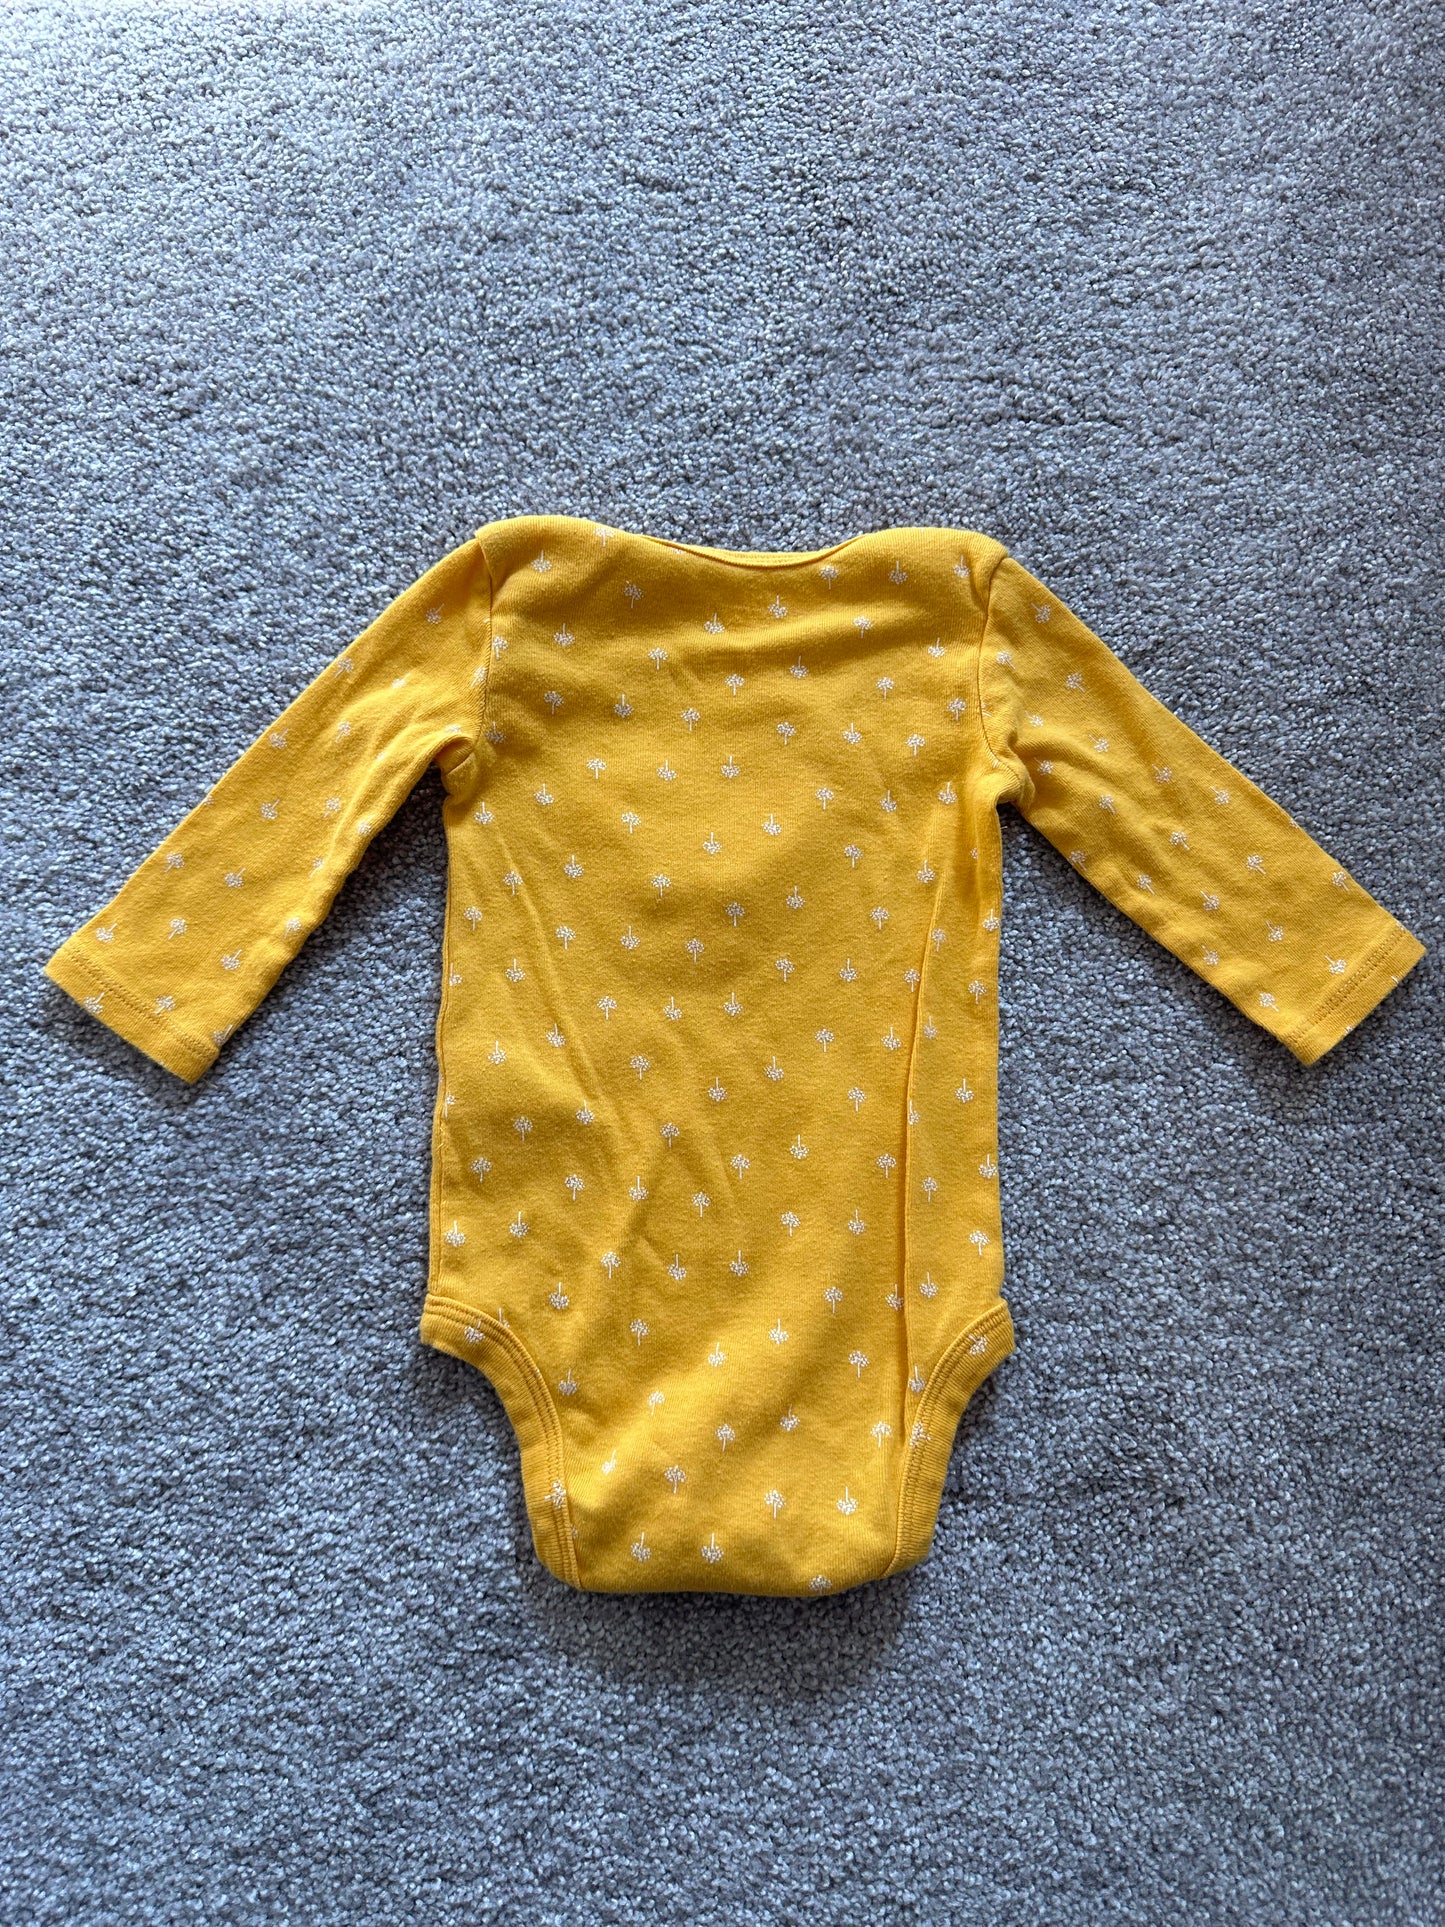 Carters & Cat/Jack & Primary | long-sleeve bodysuit bundle (4)  | girl | multi-color | 3-6 months